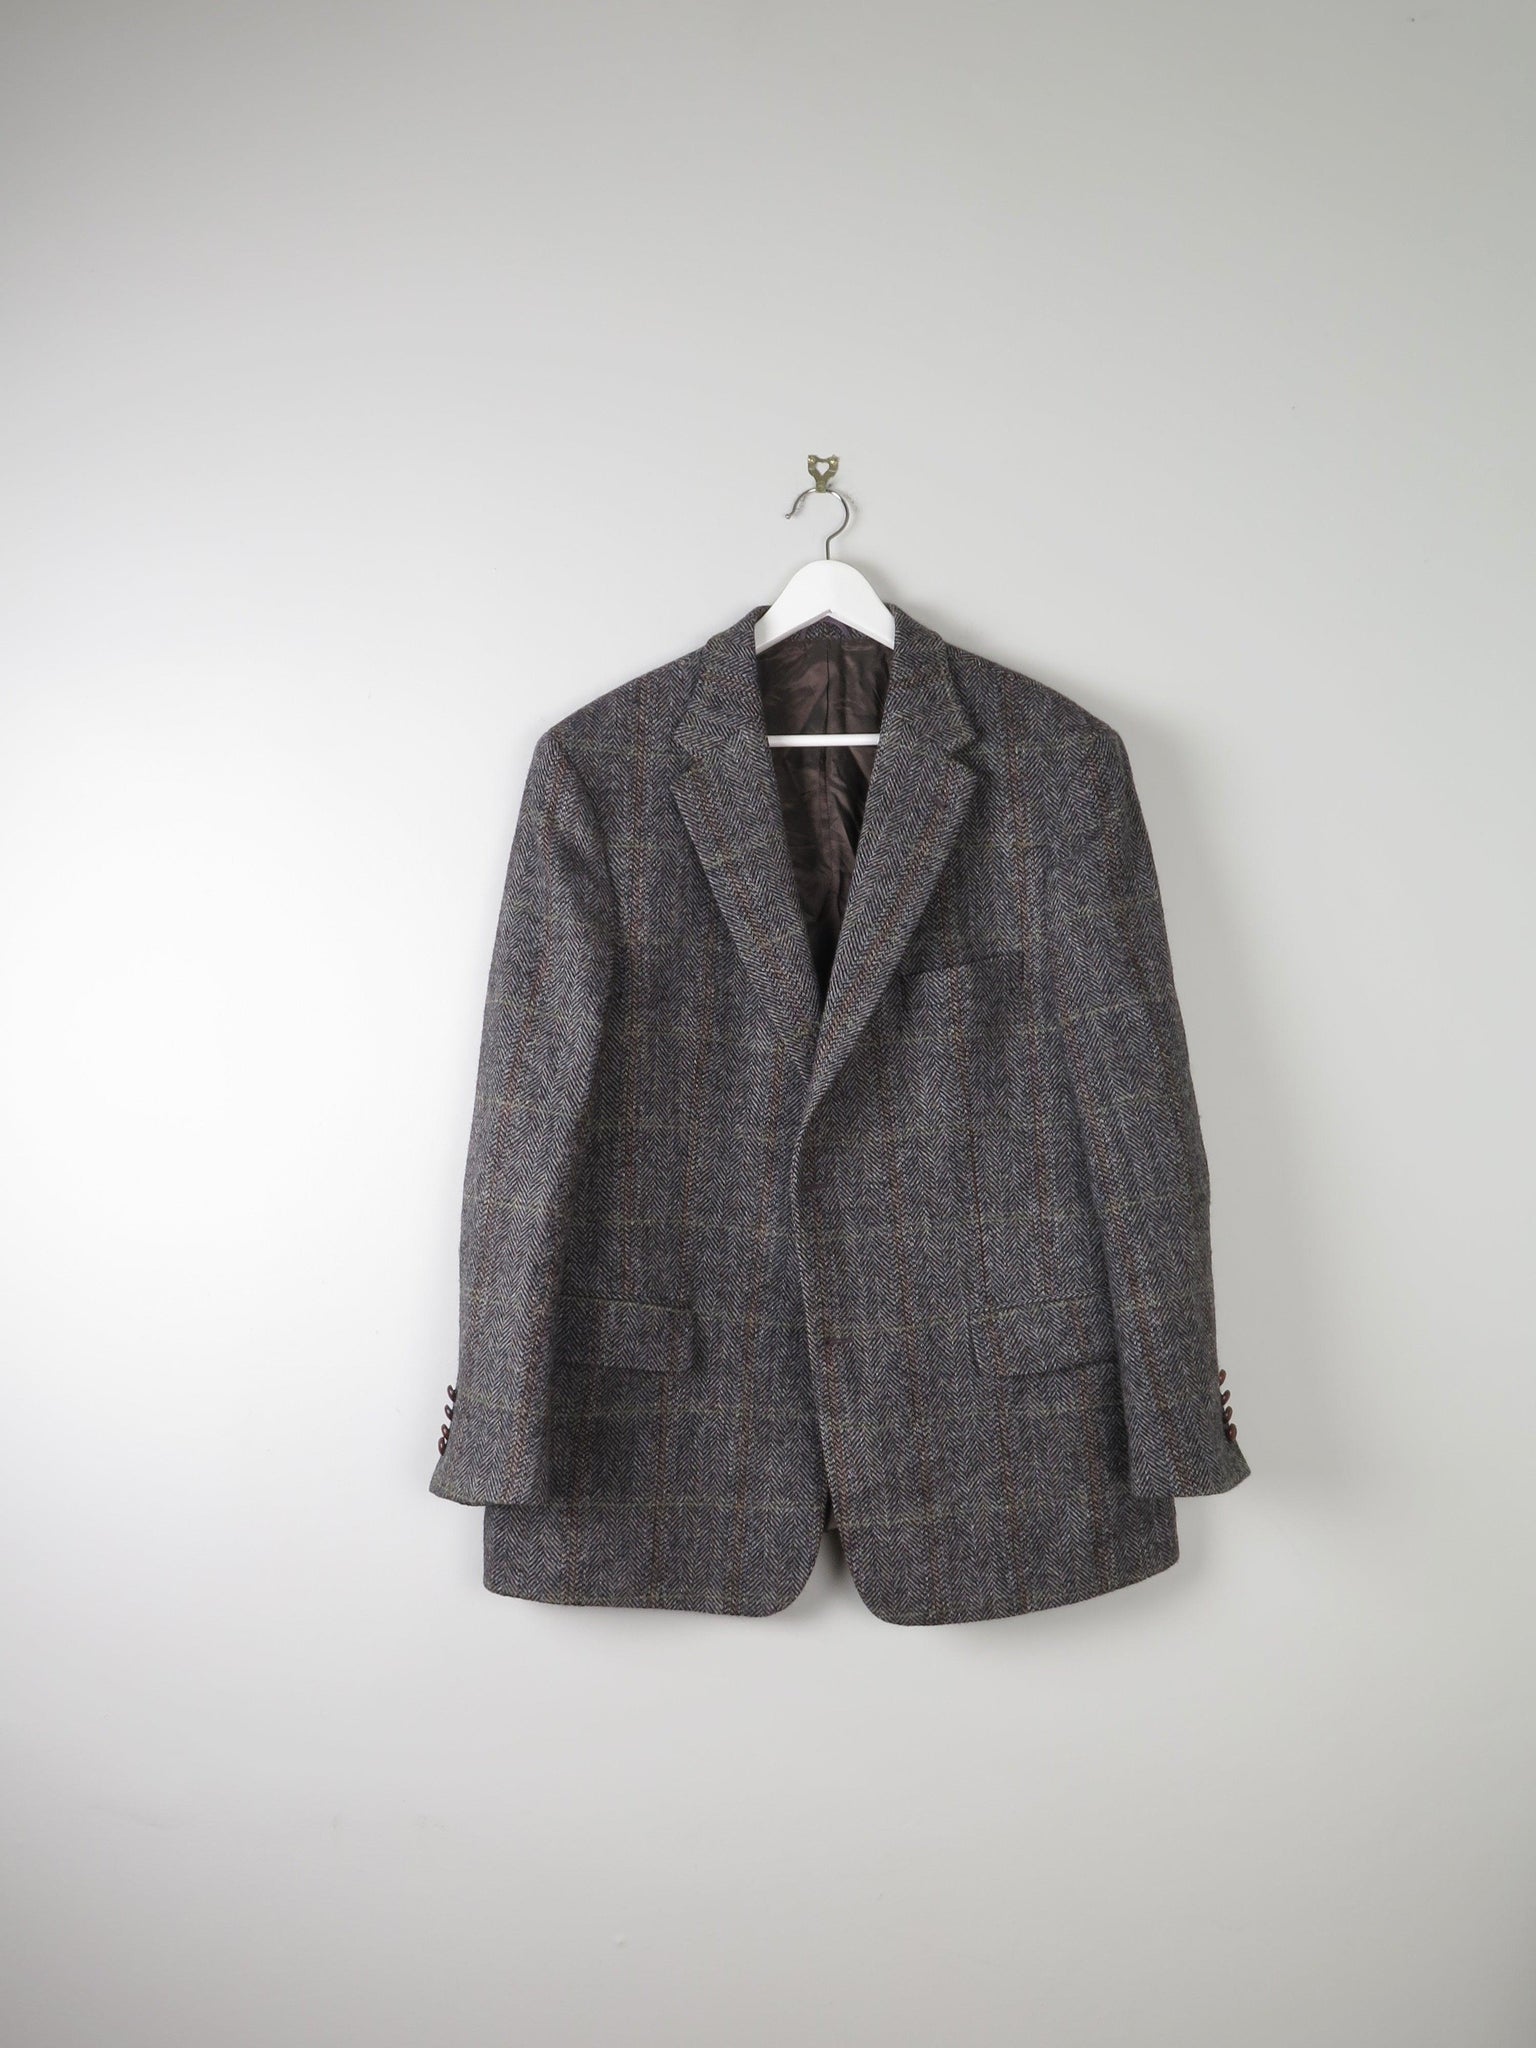 Men’s Harris Tweed Jacket 44/L - The Harlequin